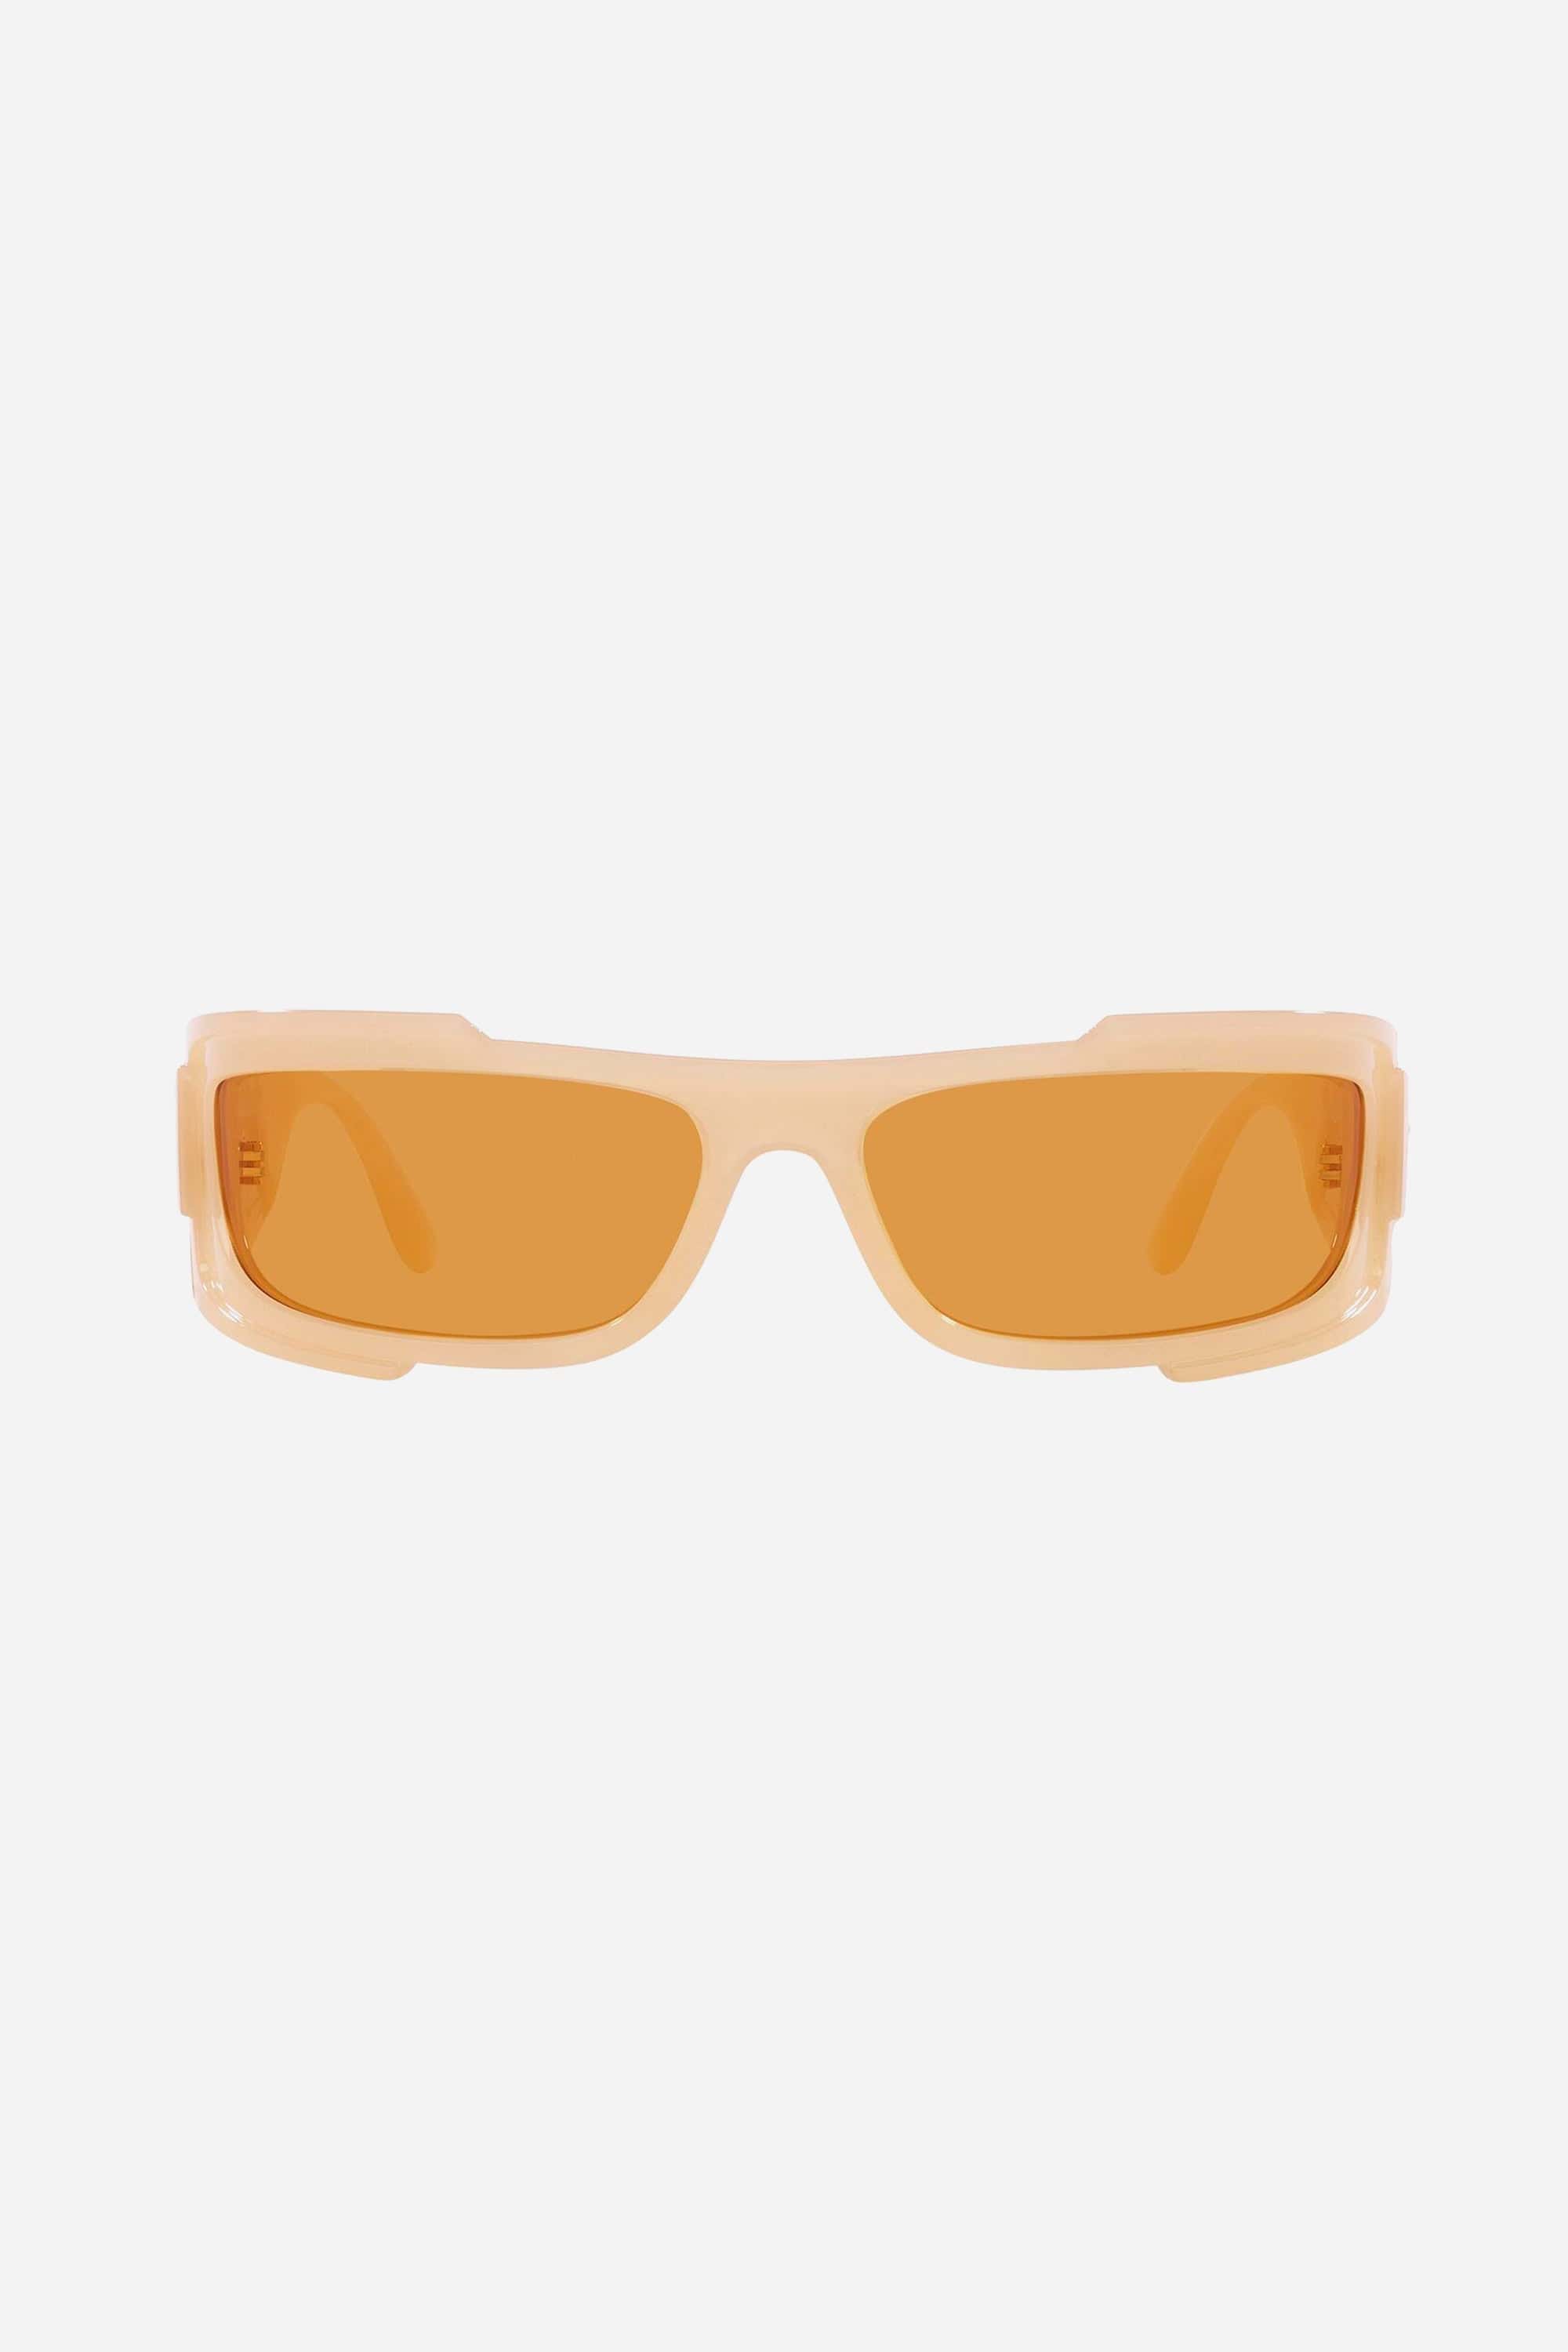 Versace rectangular beige sunglasses with the iconic jellyfish - Eyewear Club